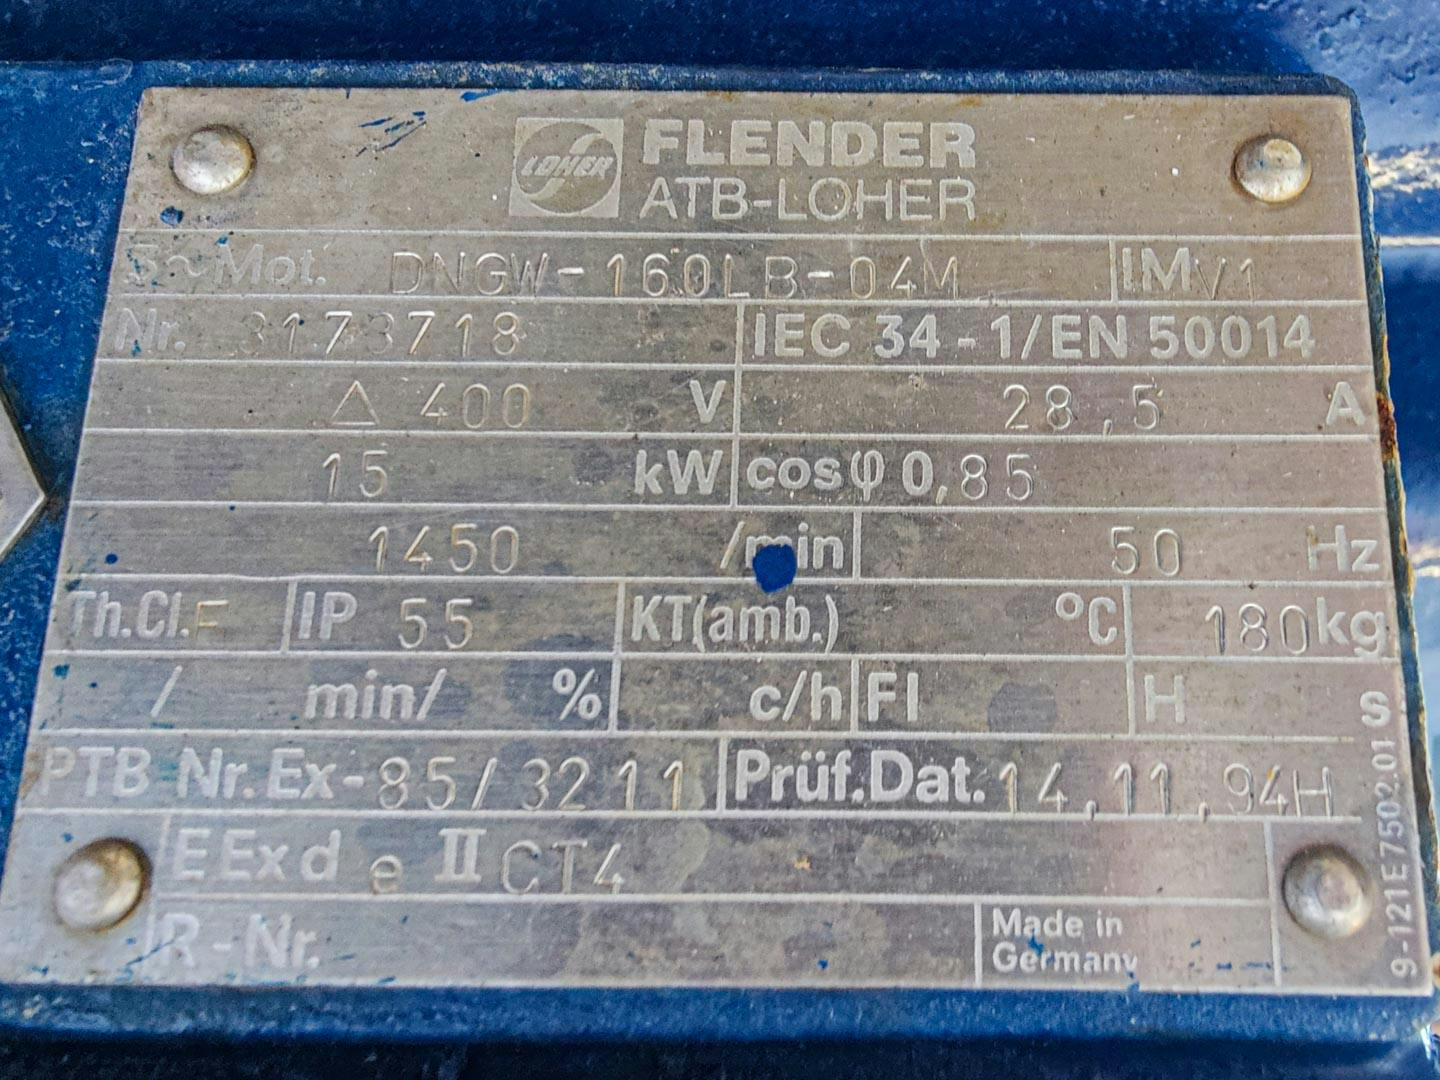 Albi Alois Binderberger 6300 Ltr - Reactor de acero inoxidable - image 13